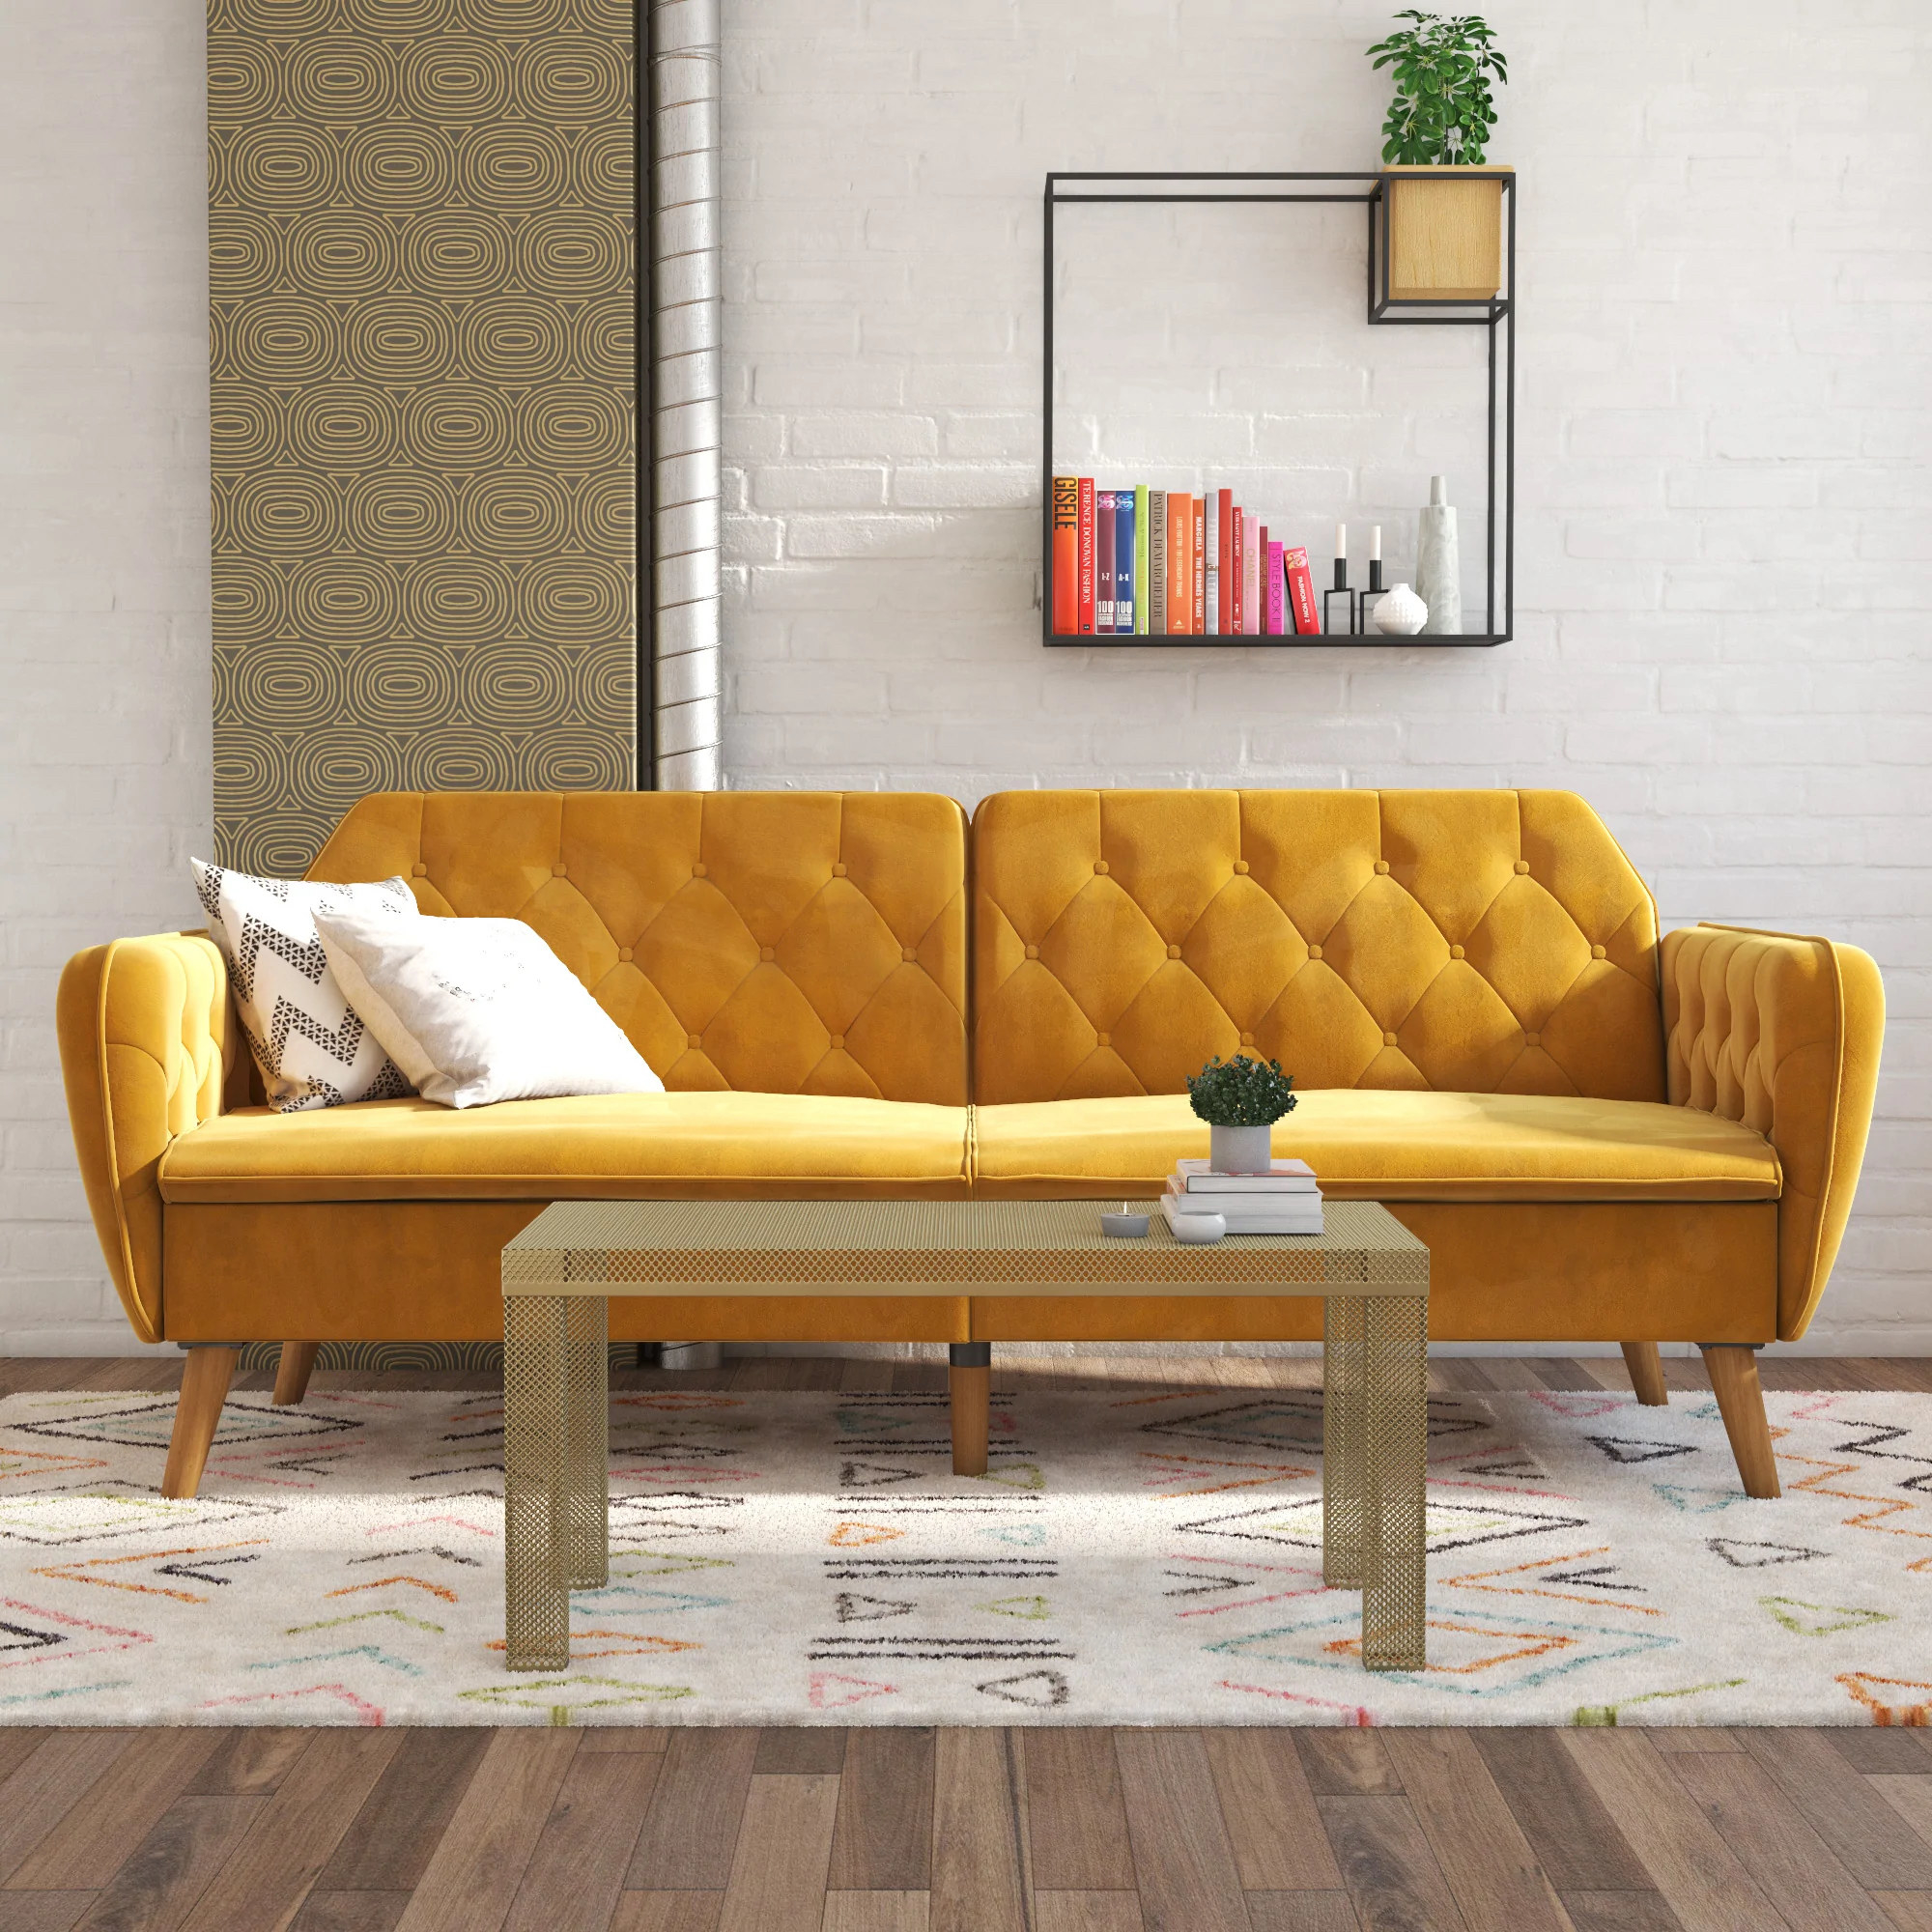 a beige mid-century modern style futon sofa